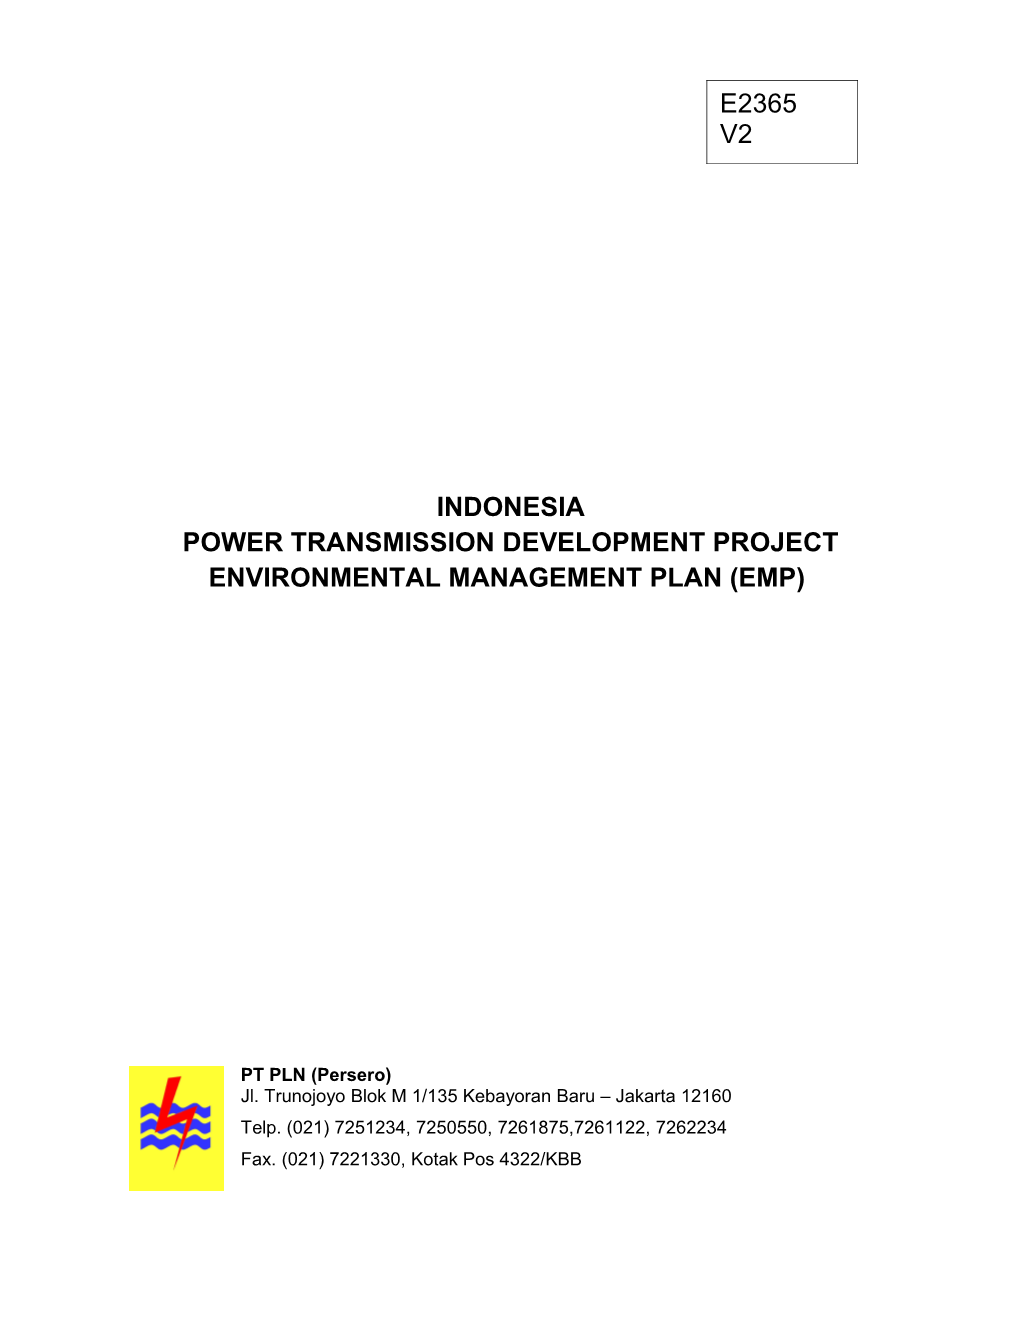 Power Transmission Development Project